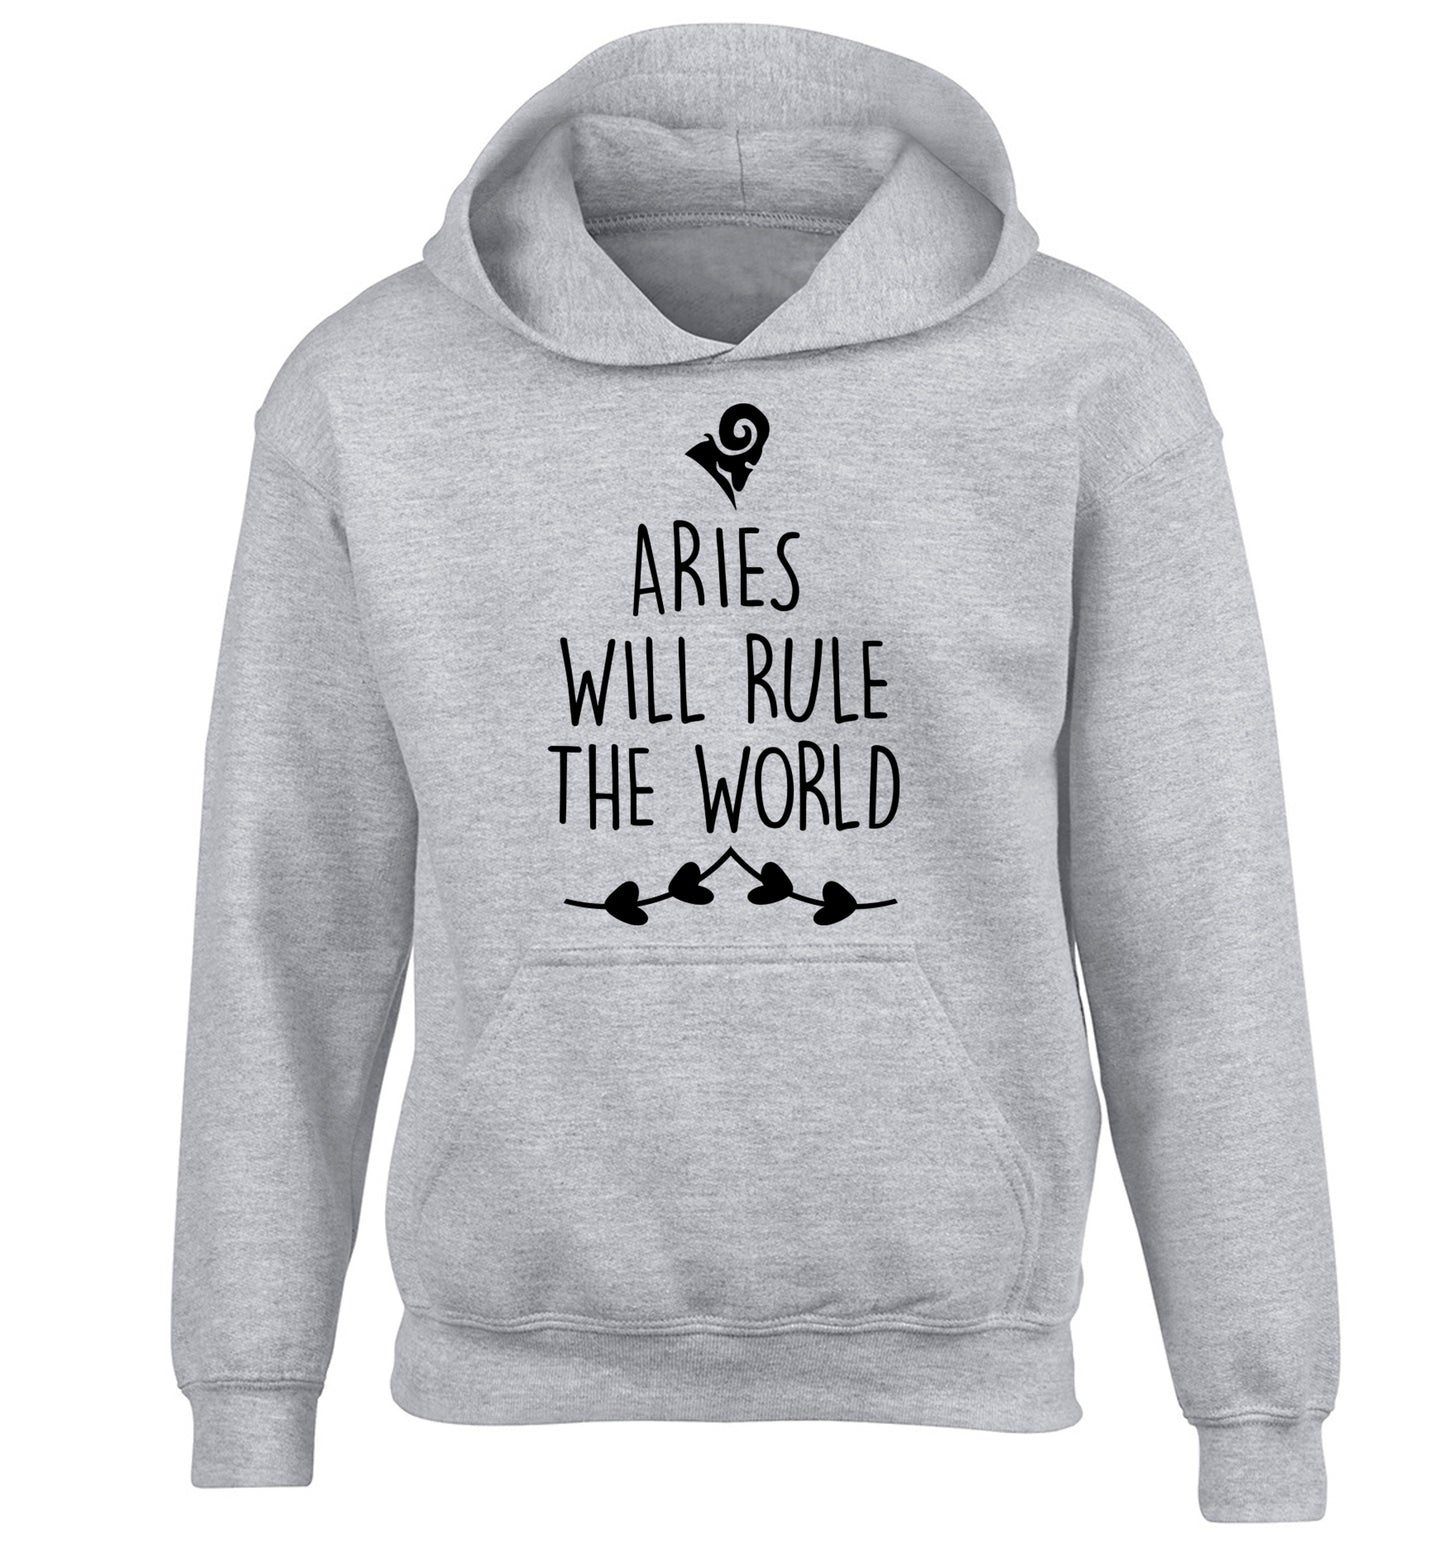 Aries will rule the world children's grey hoodie 12-13 Years